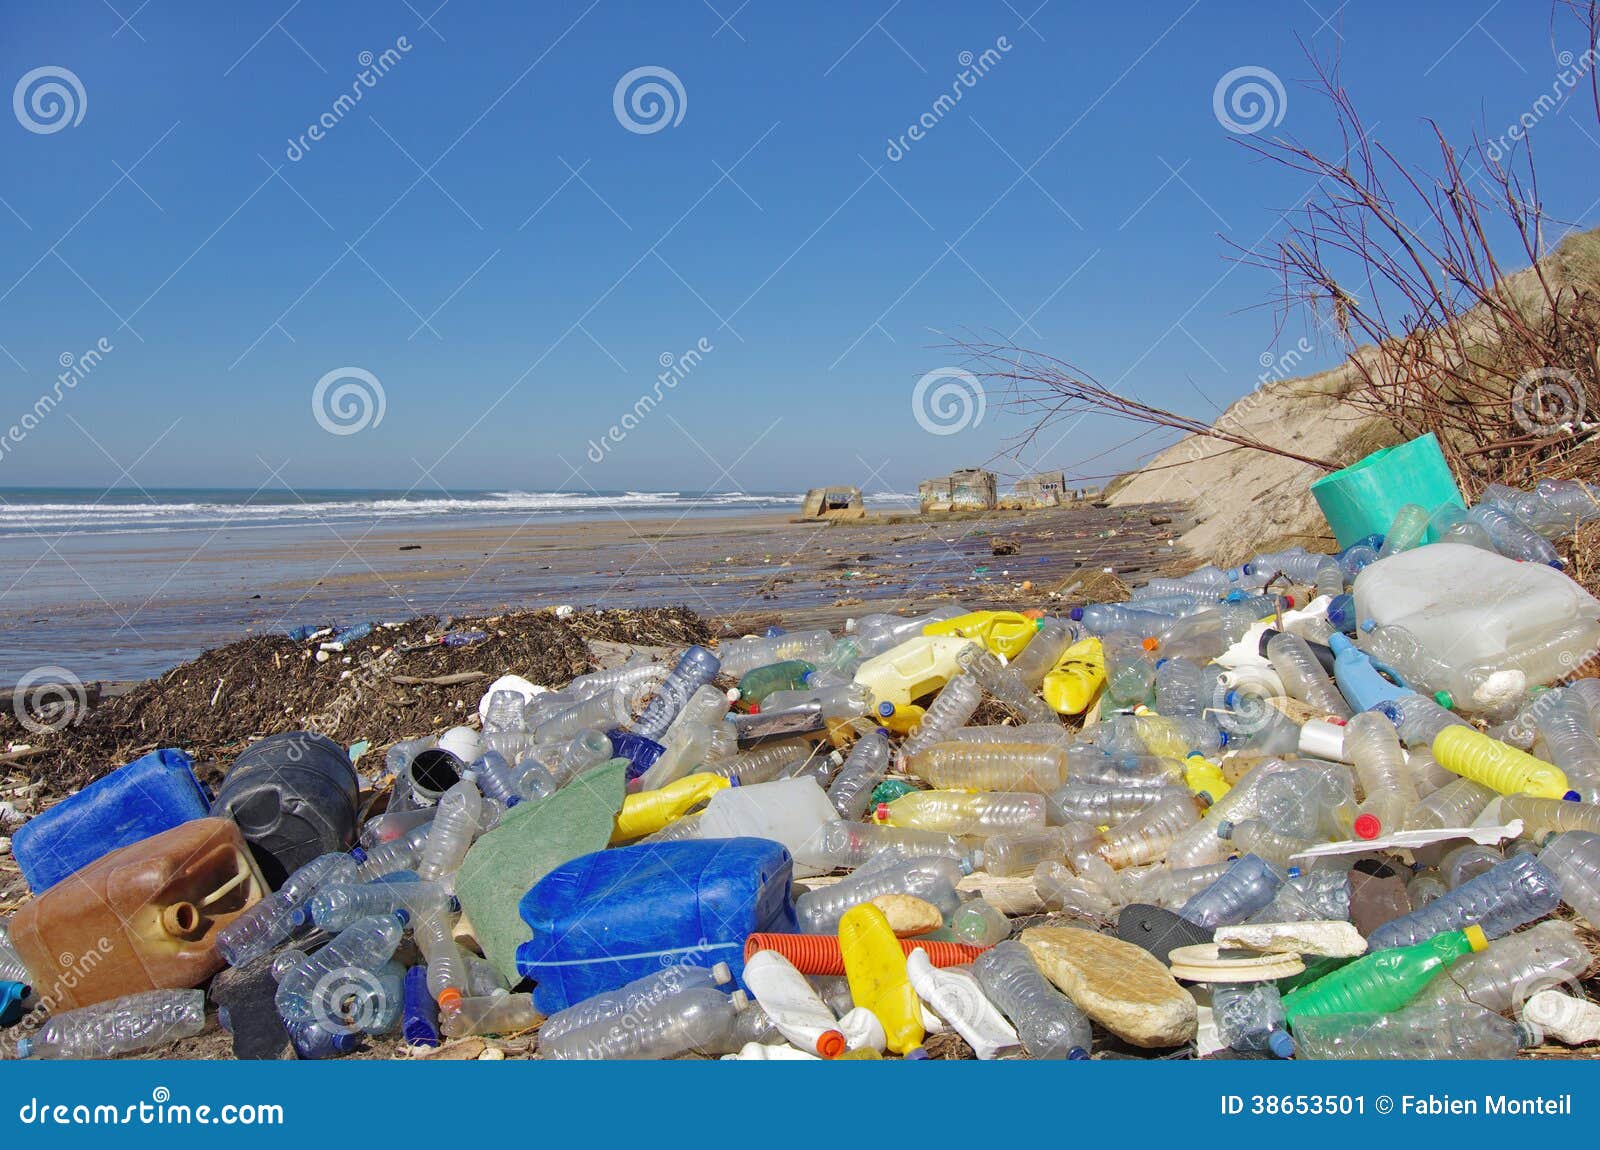 beach plastics pollution